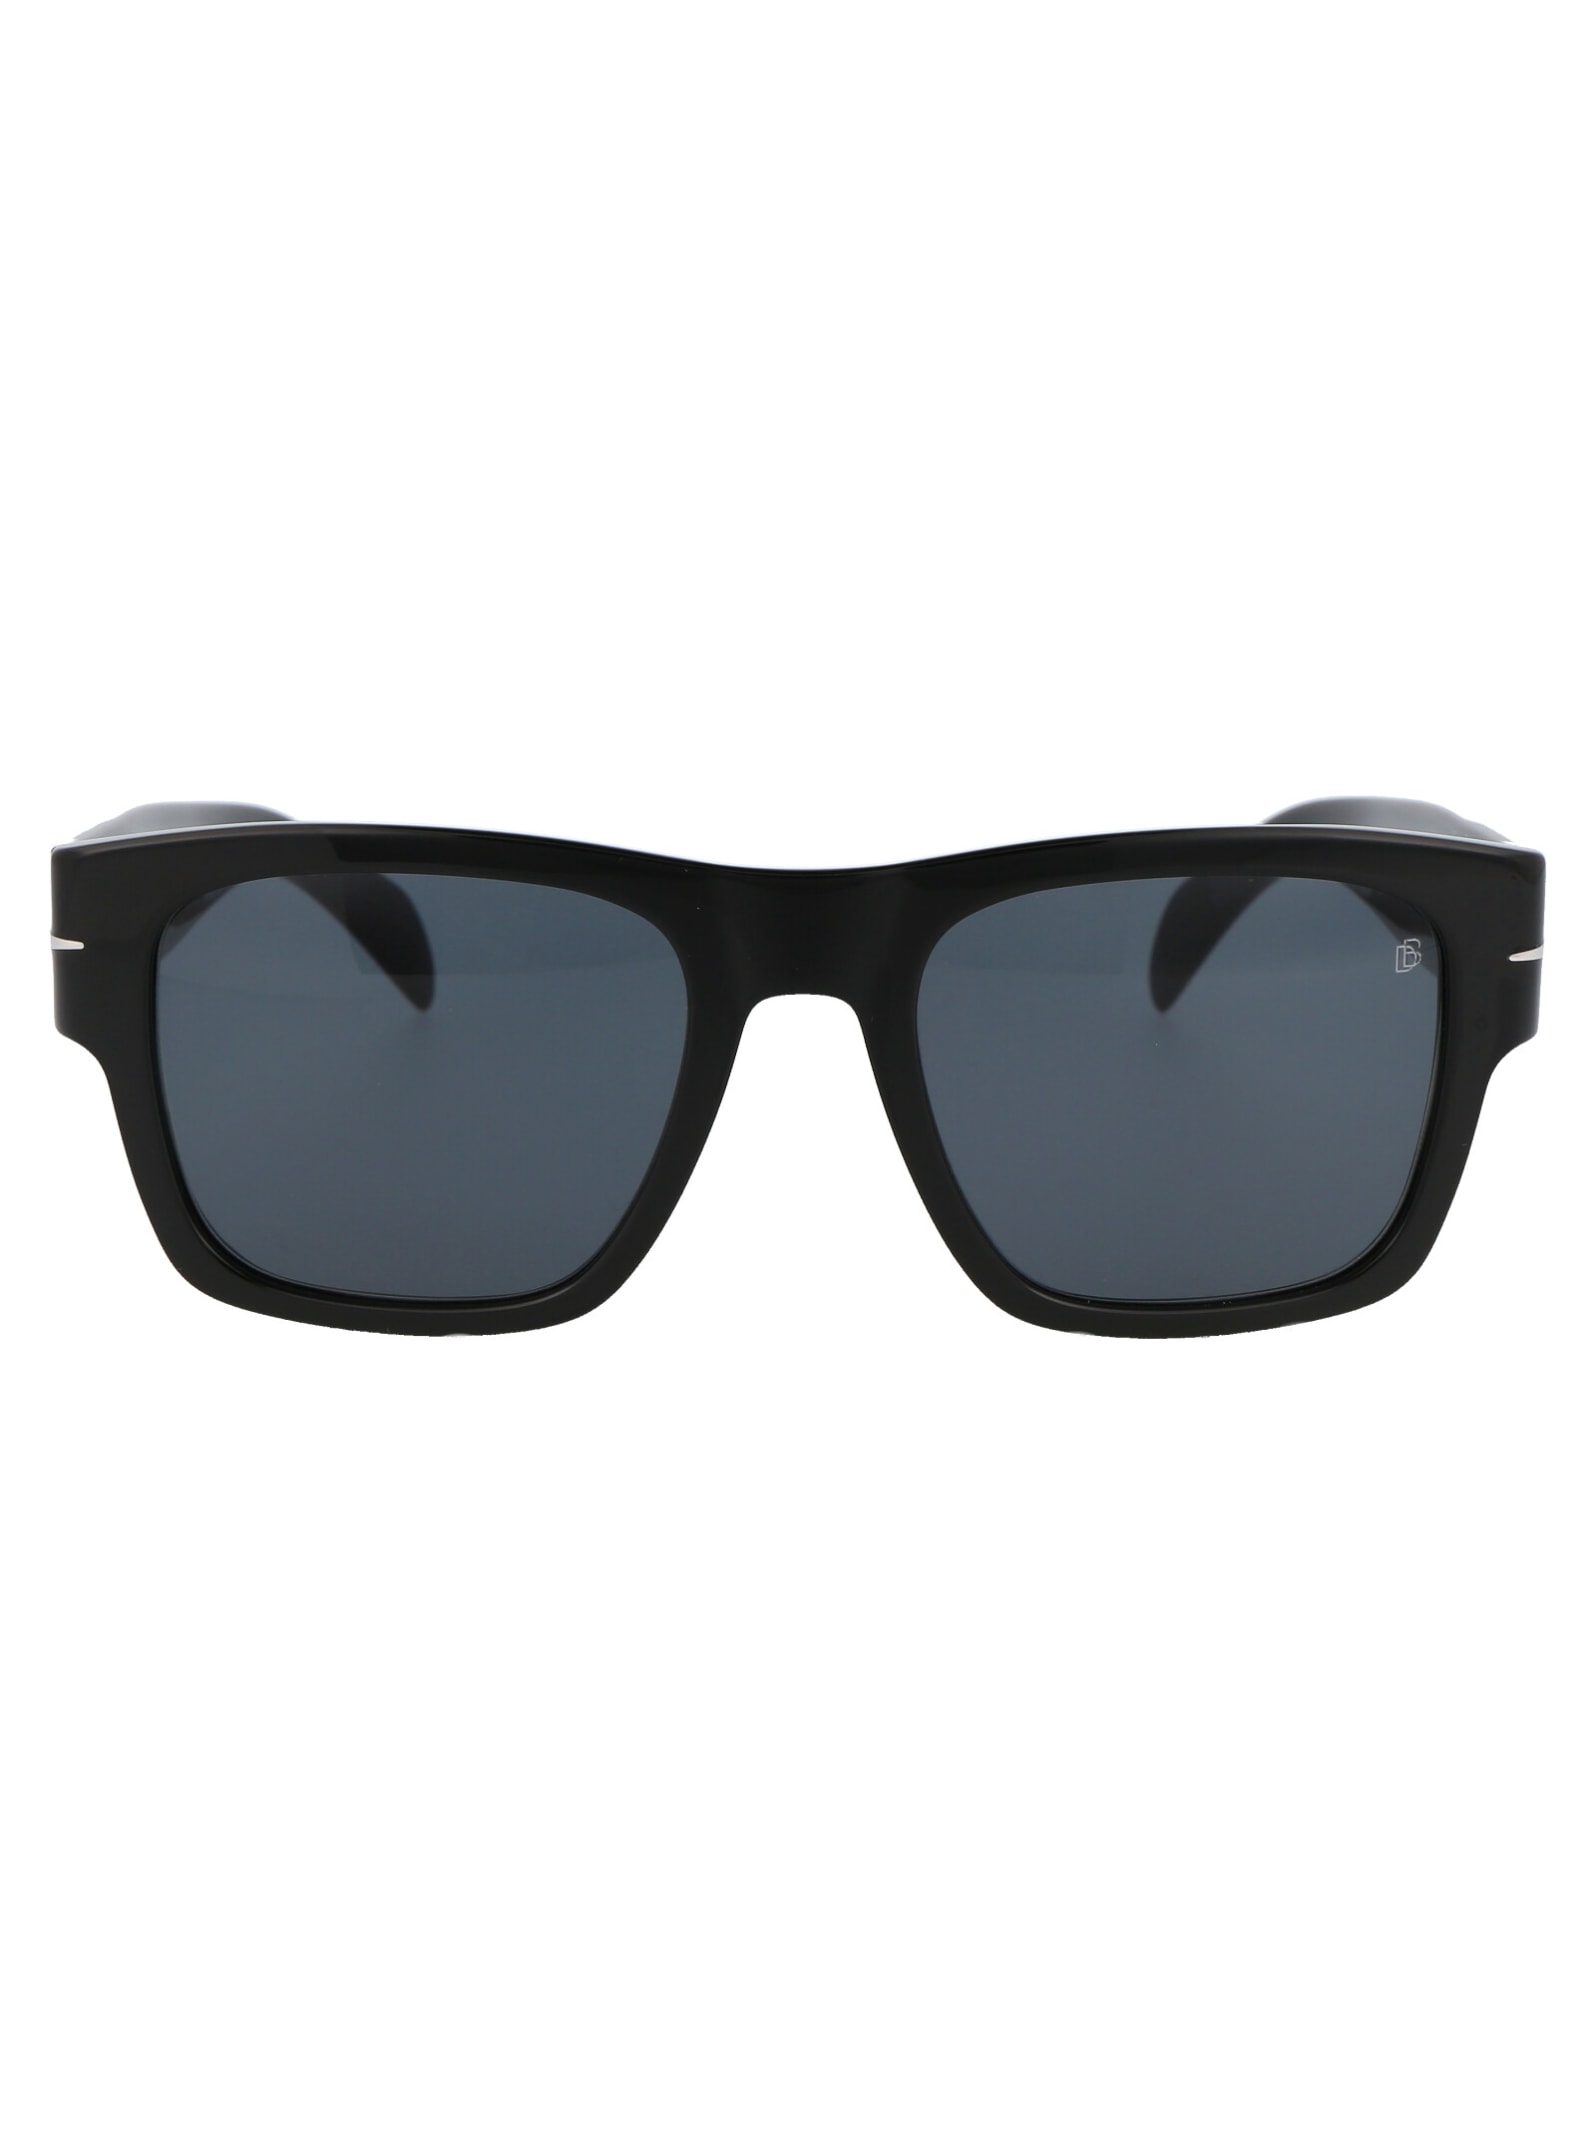 db eyewear by david beckham db 7000/s bold sunglasses